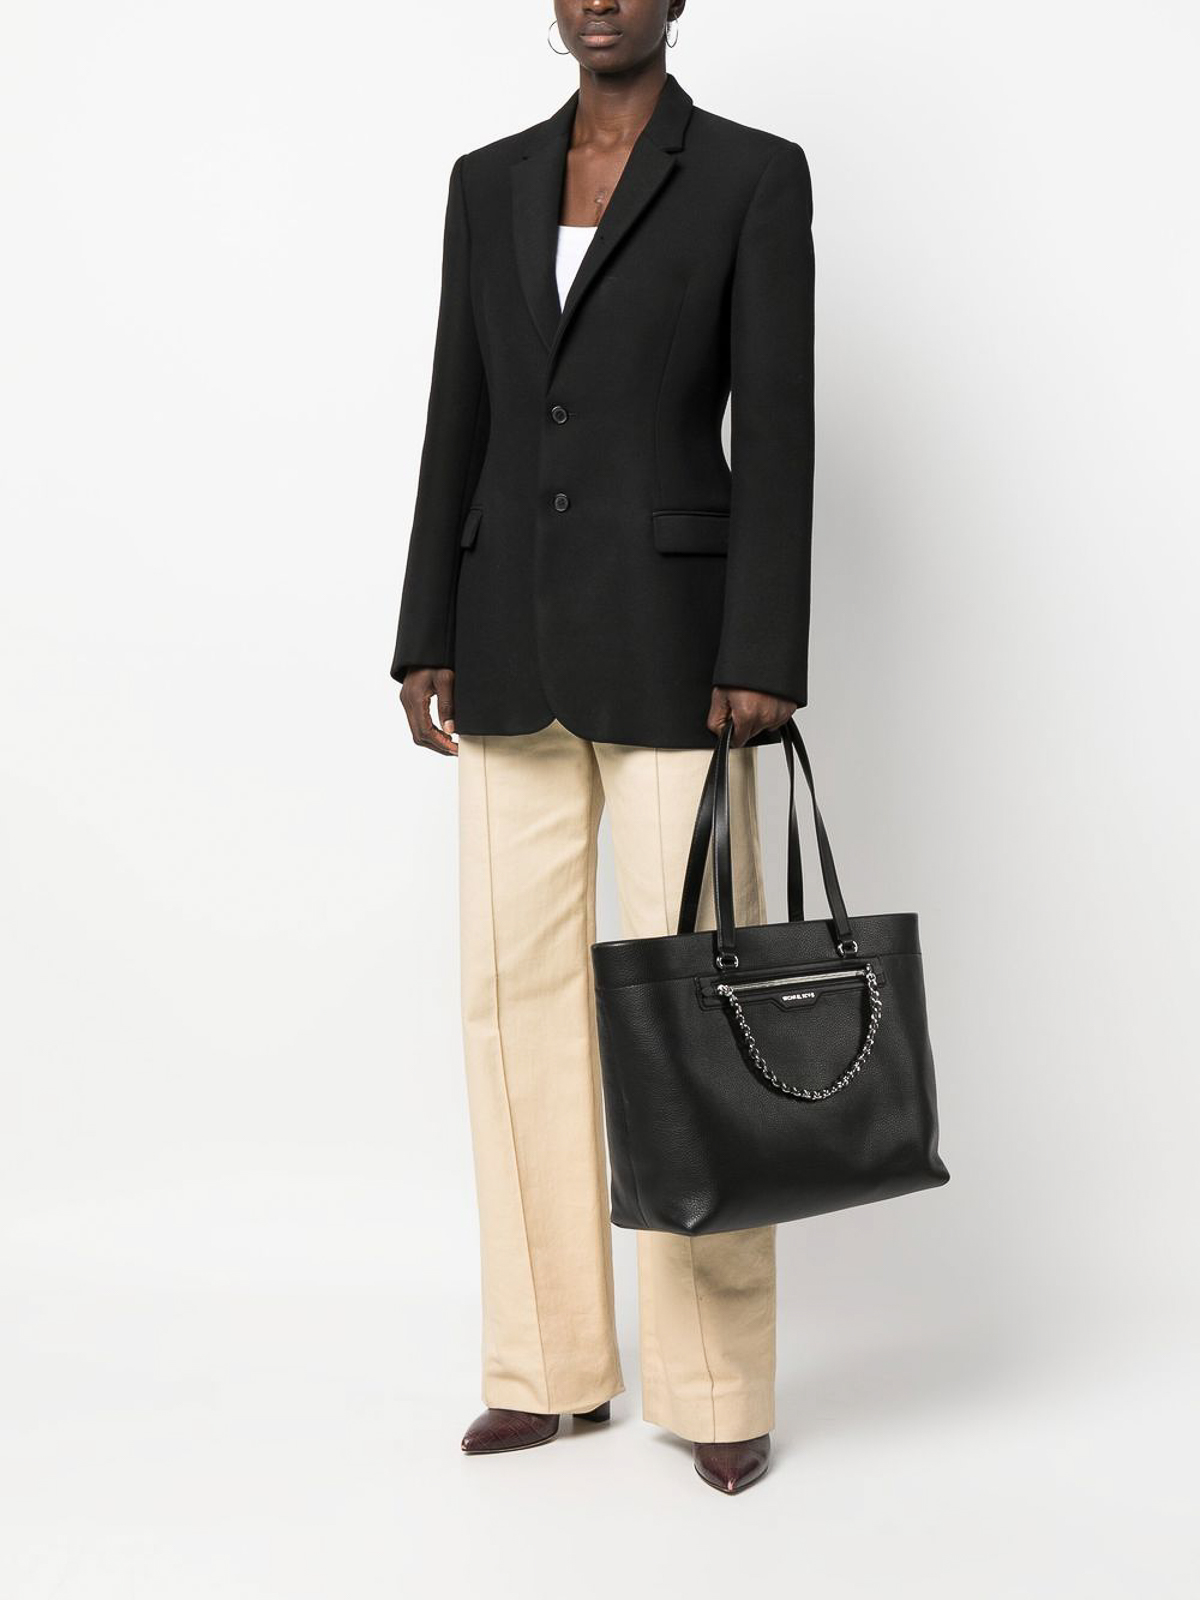 Michael Kors Women's Elliot Tote Bag